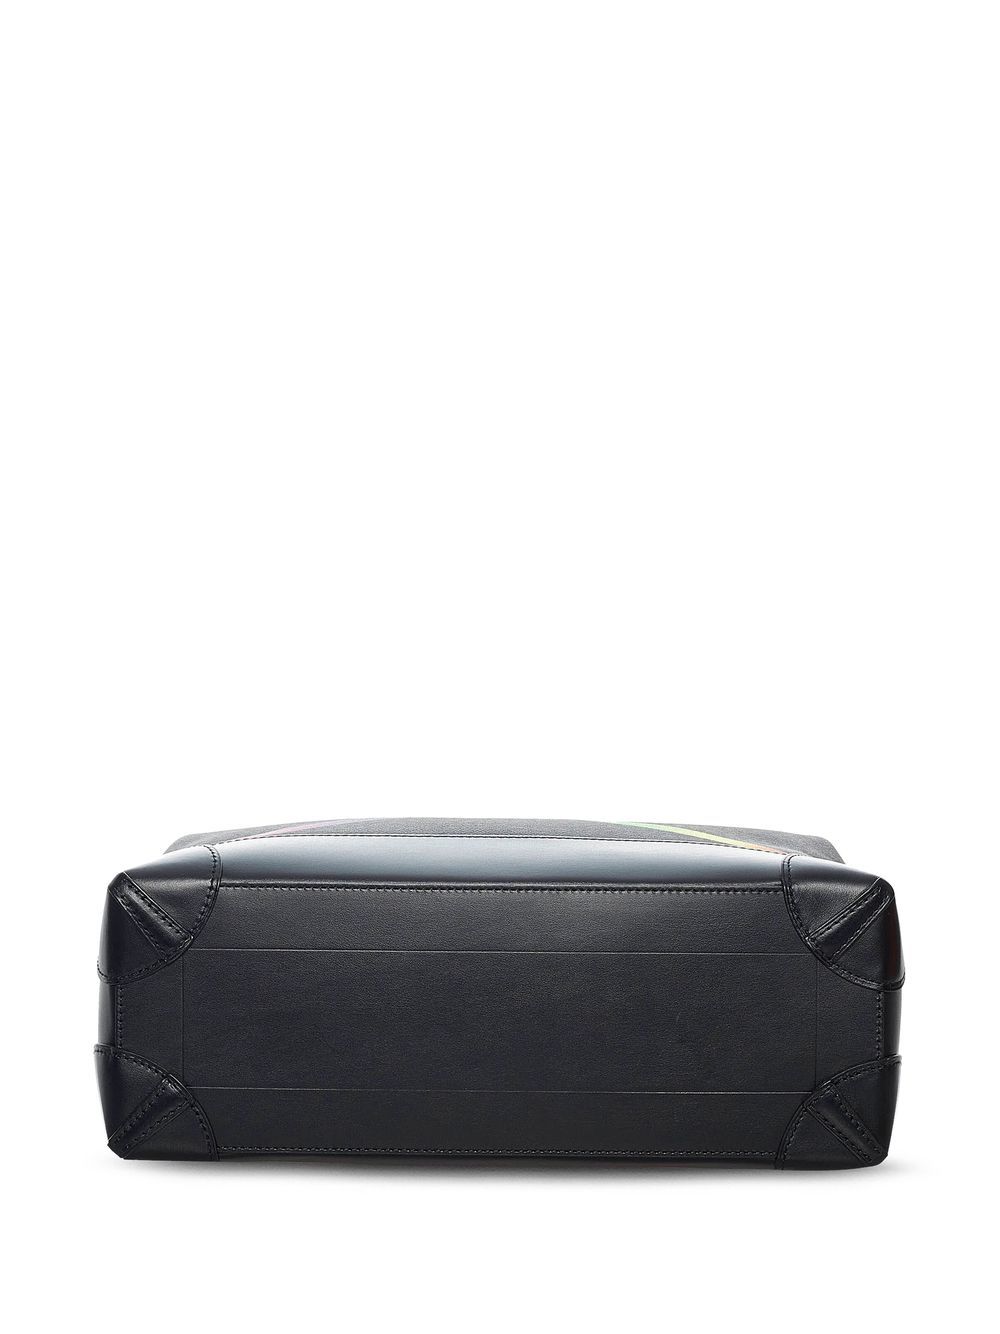 Louis Vuitton pre-owned 2019 City Steamer MM Handbag - Farfetch